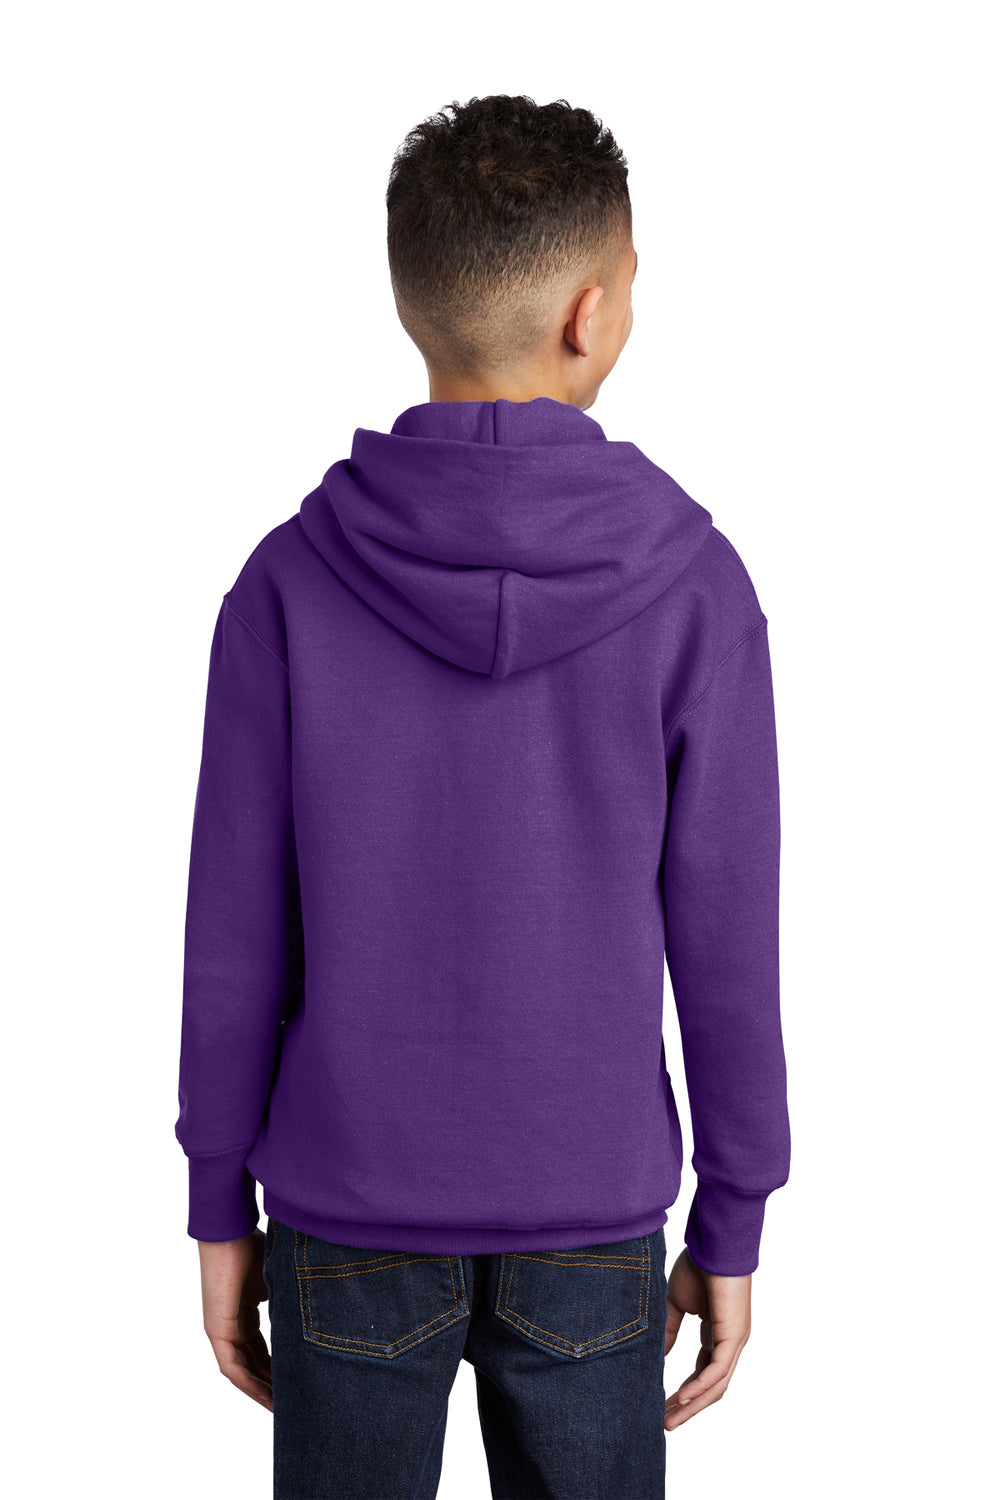 Port & Company PC90YH Youth Core Fleece Hooded Sweatshirt Hoodie Team Purple Back